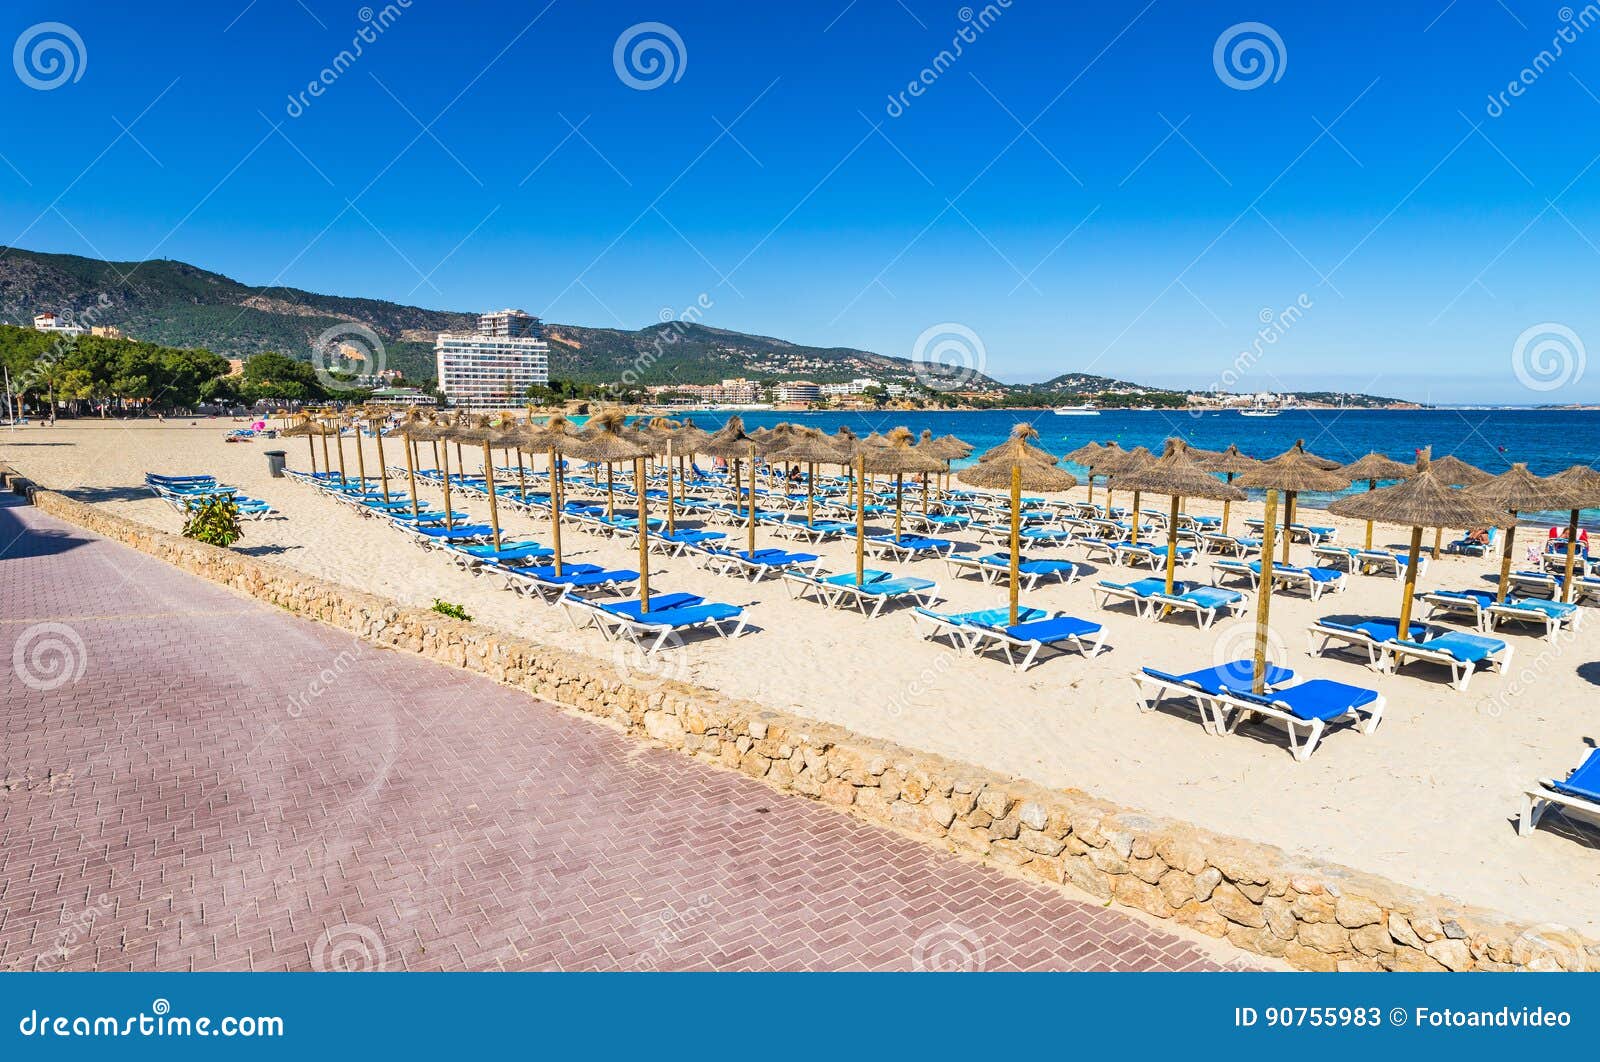 Spain Majorca Beach Palmanova Stock Image Image Of Scene Place